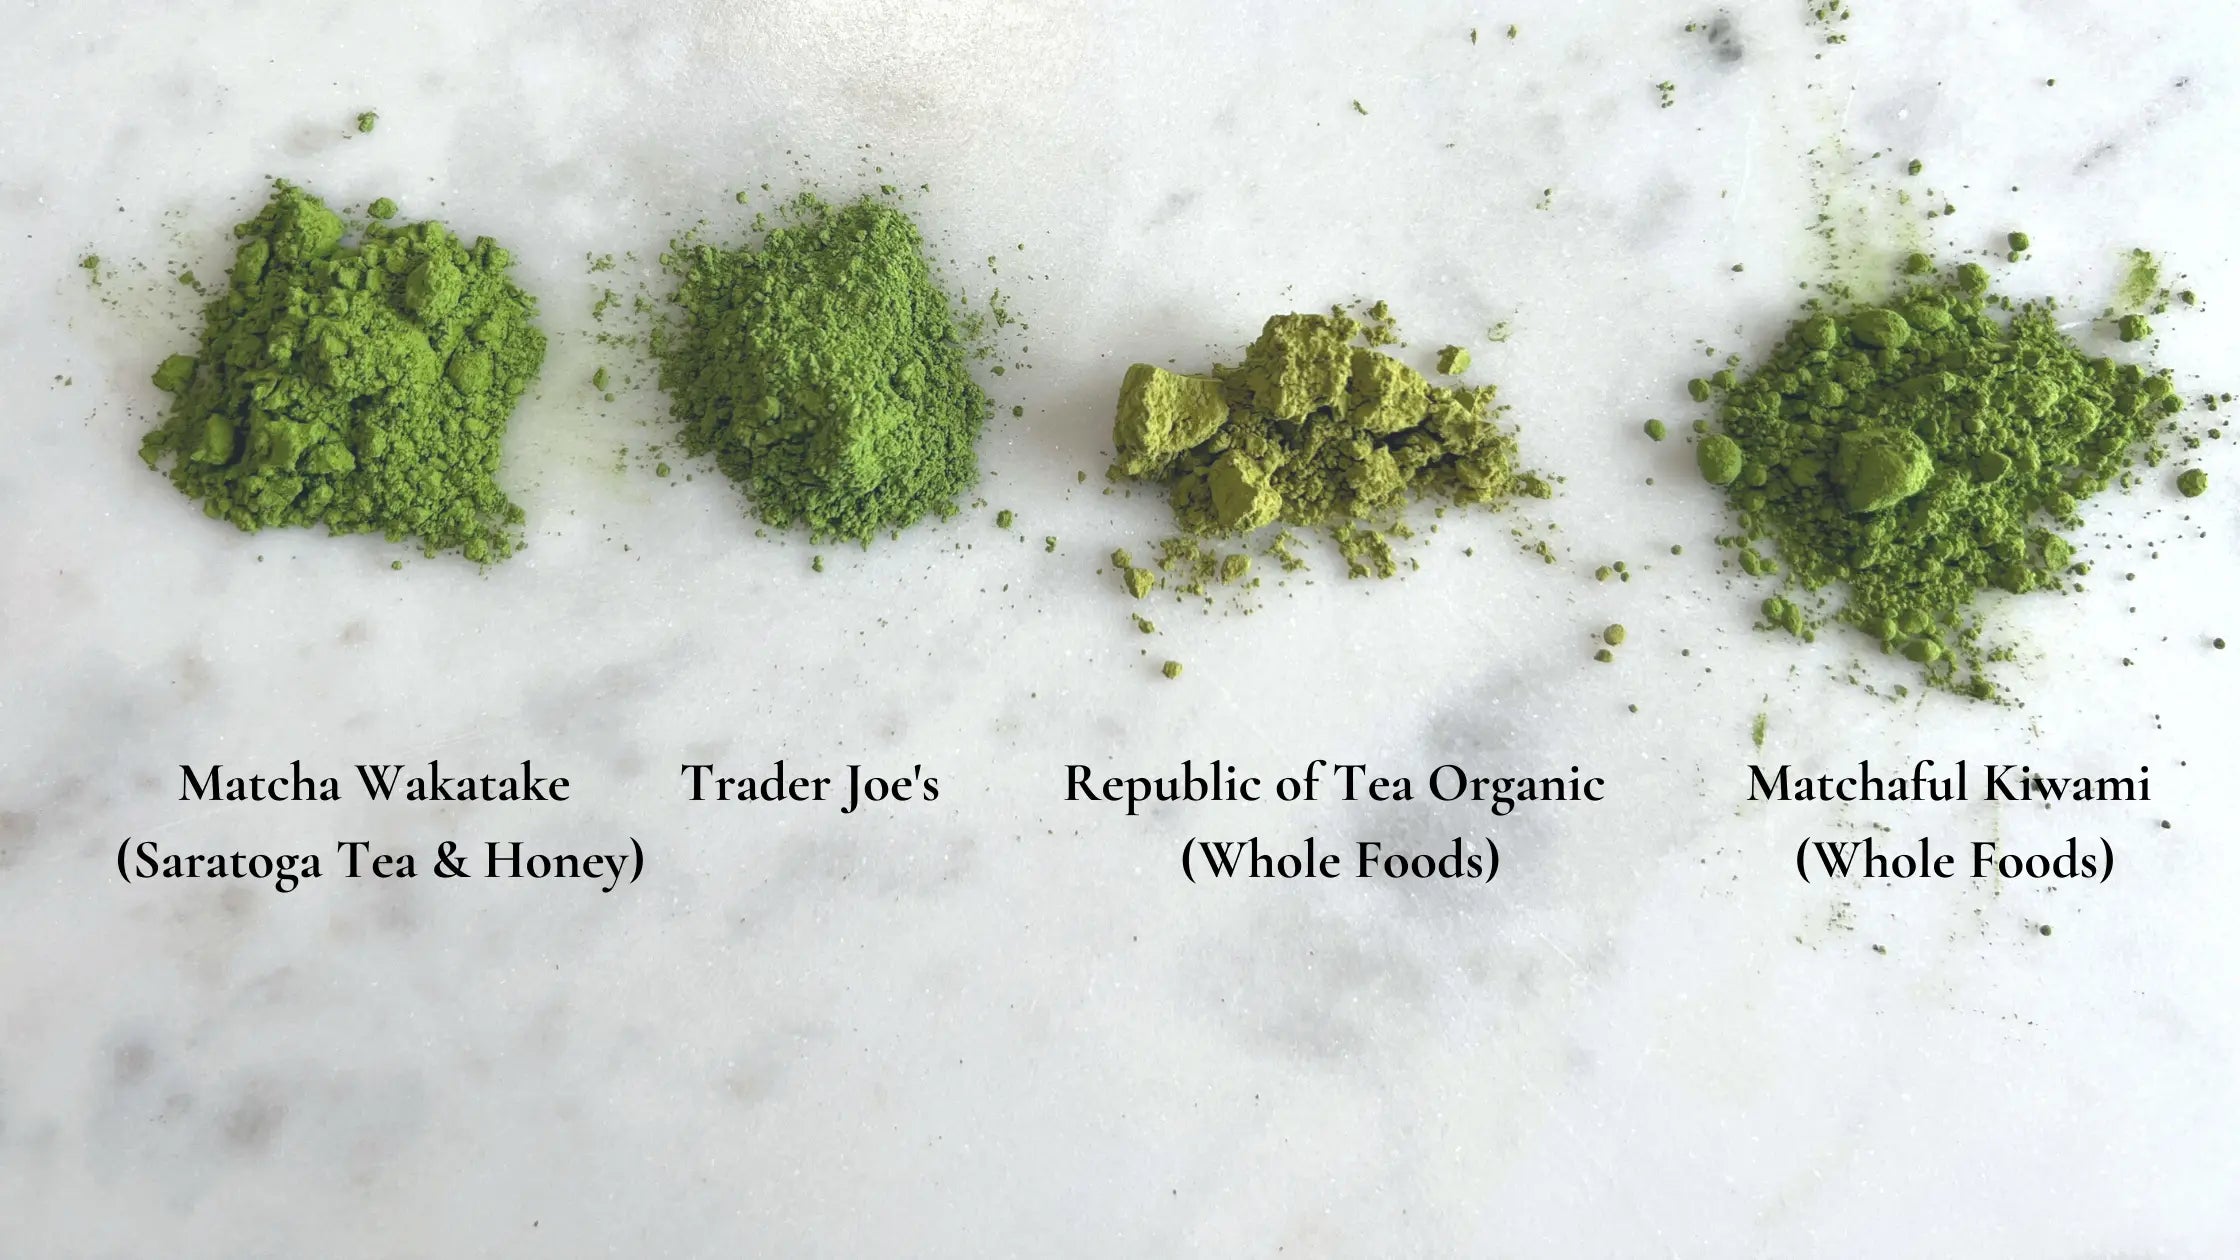 color comparison of piles of matcha powder from left to right: Matcha Wakatake, Trader Joe's, Republic of Tea Organic Matcha, Matchaful Kiwami